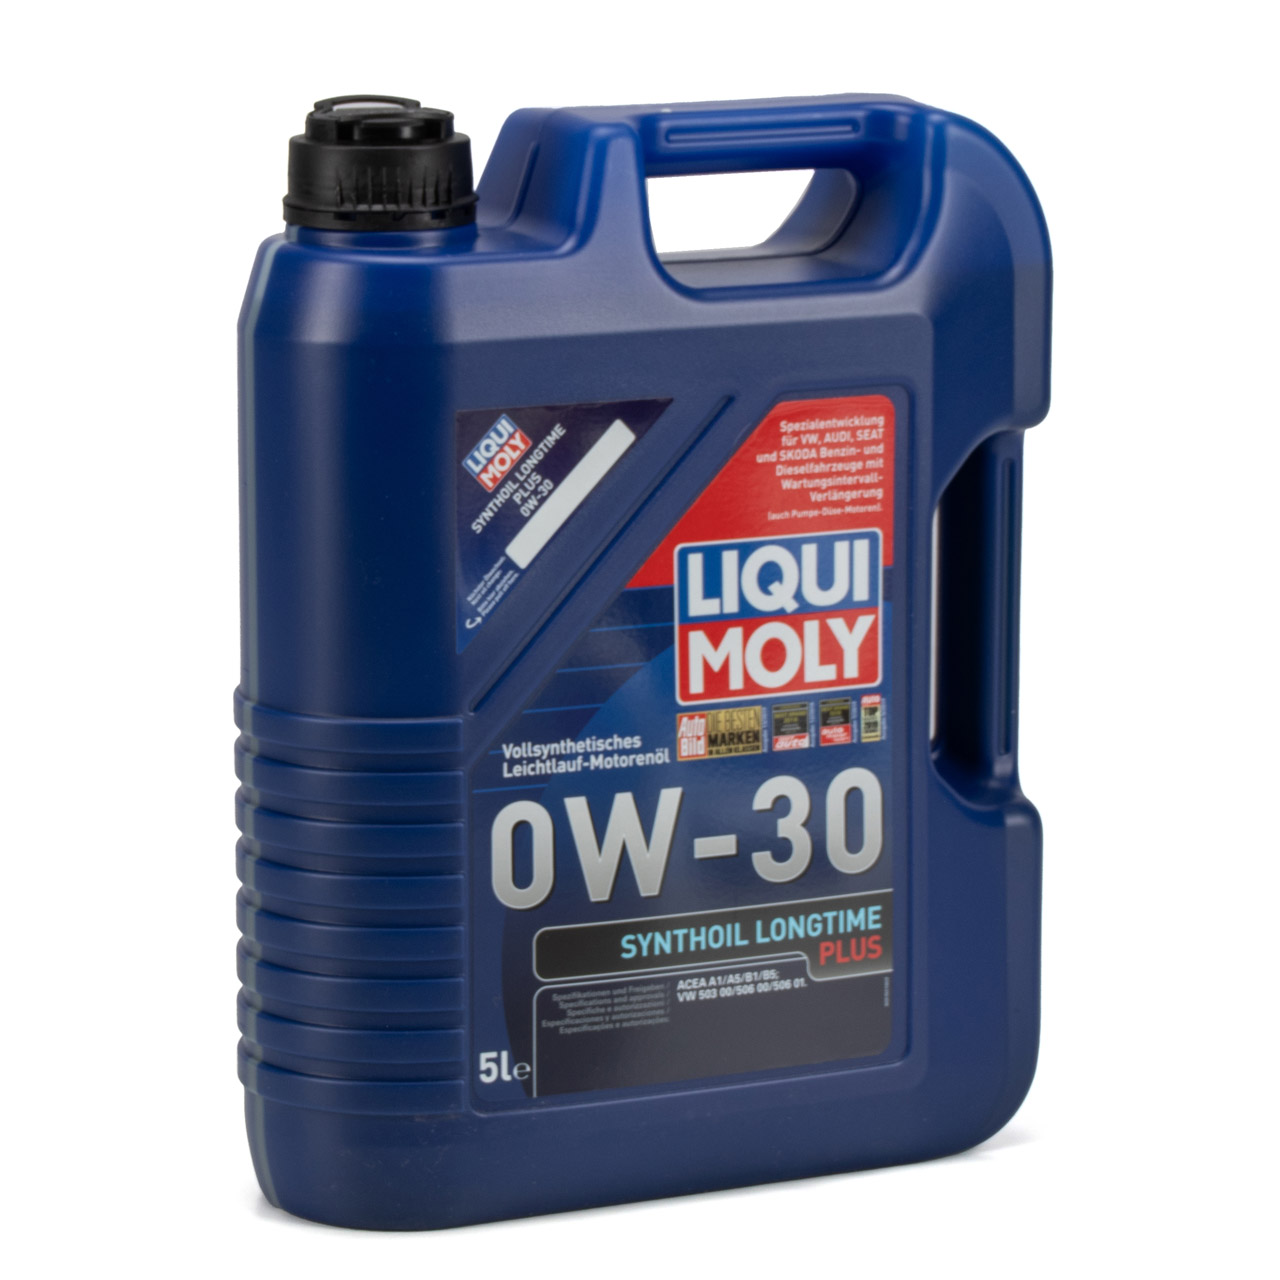 10L 10 Liter LIQUI MOLY SYNTHOIL LONGTIME PLUS Motoröl Öl 0W30 VW 503/506.00